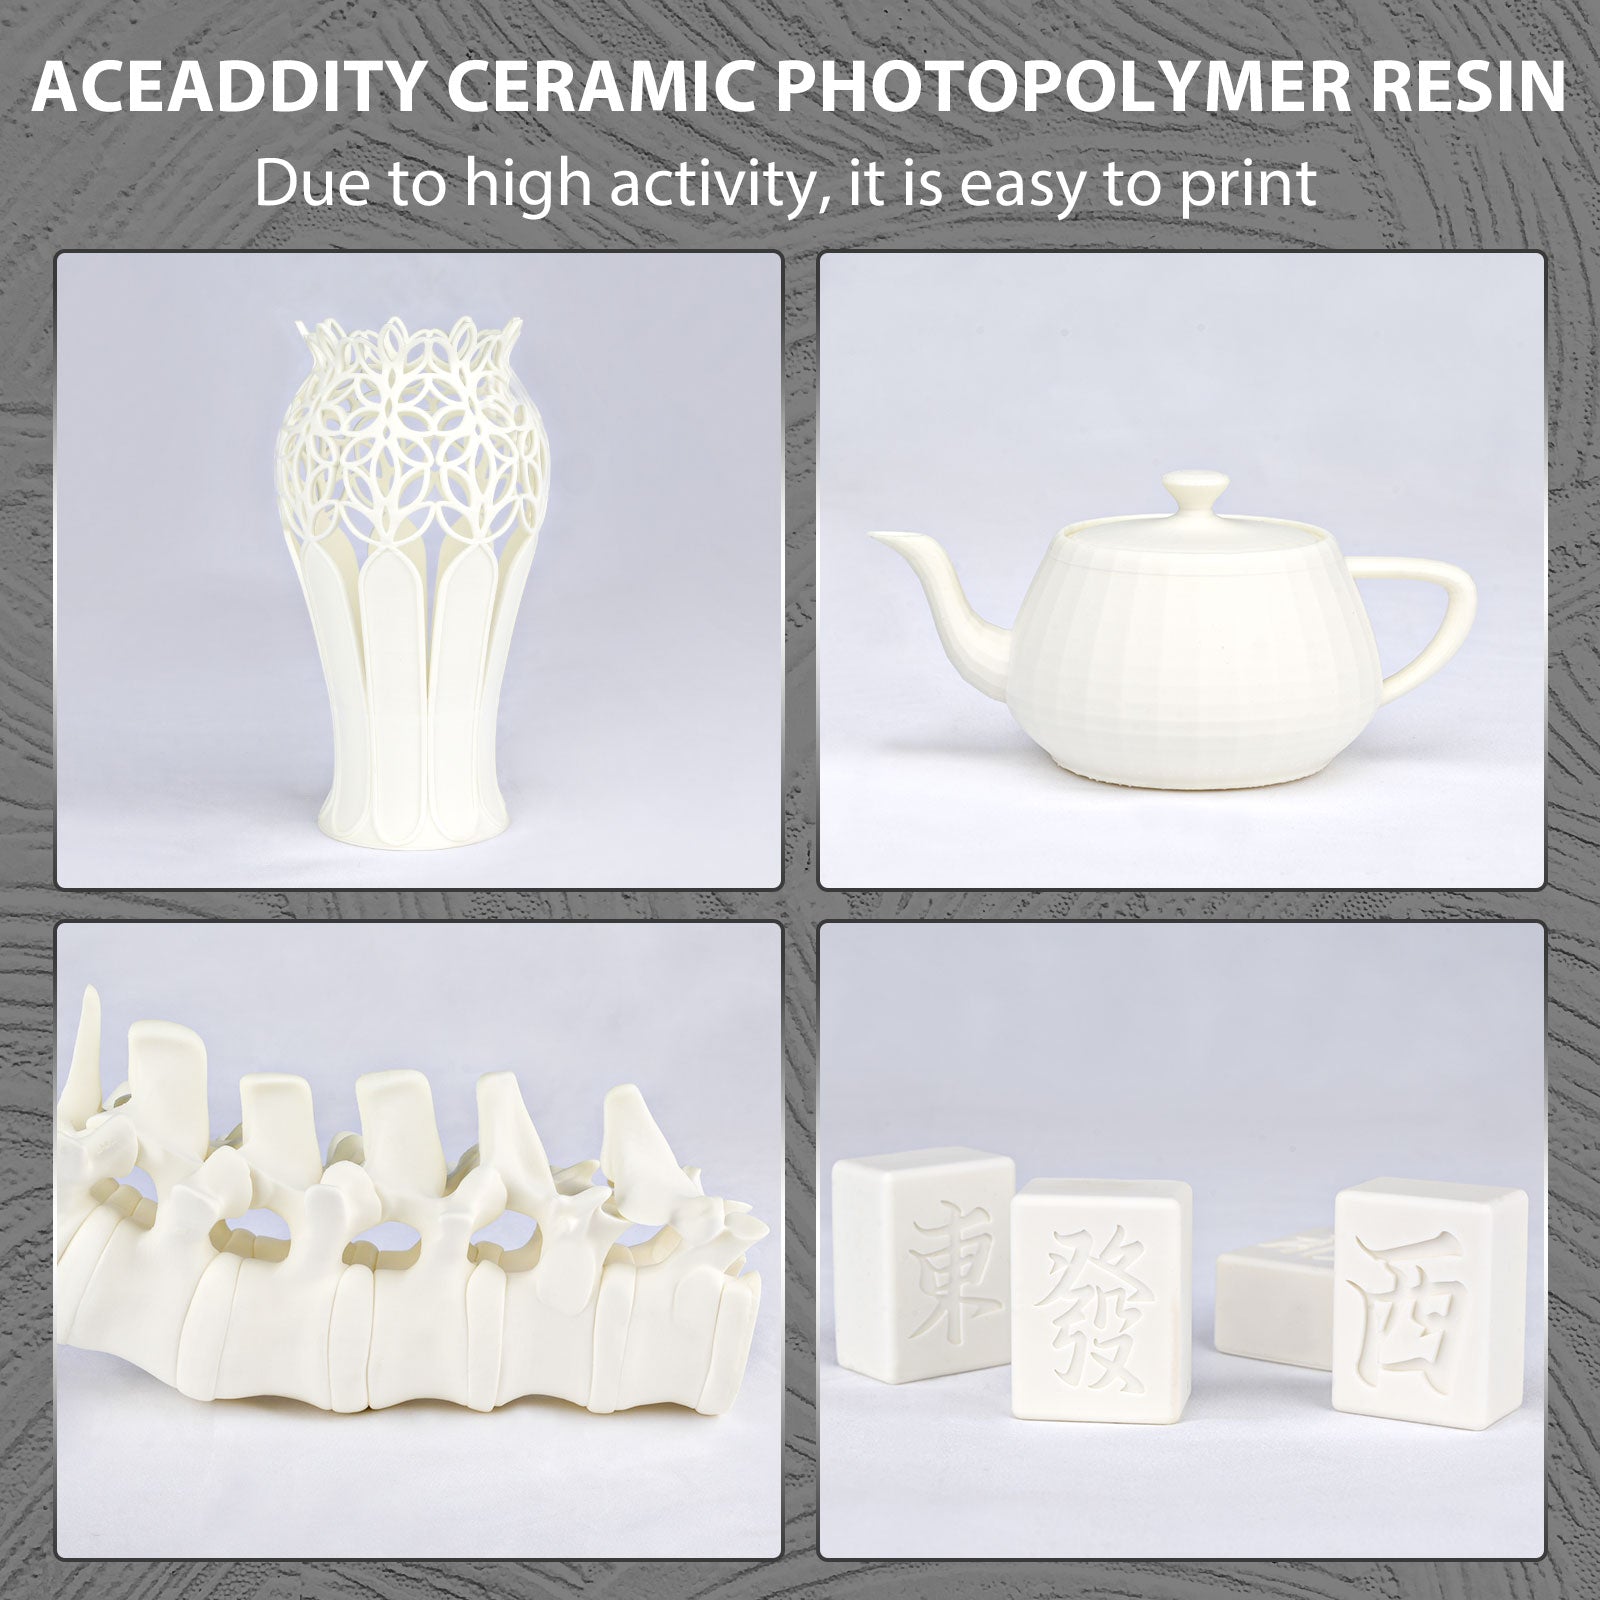 Aceaddity Ceramic Photopolymer 3D Printing Resin